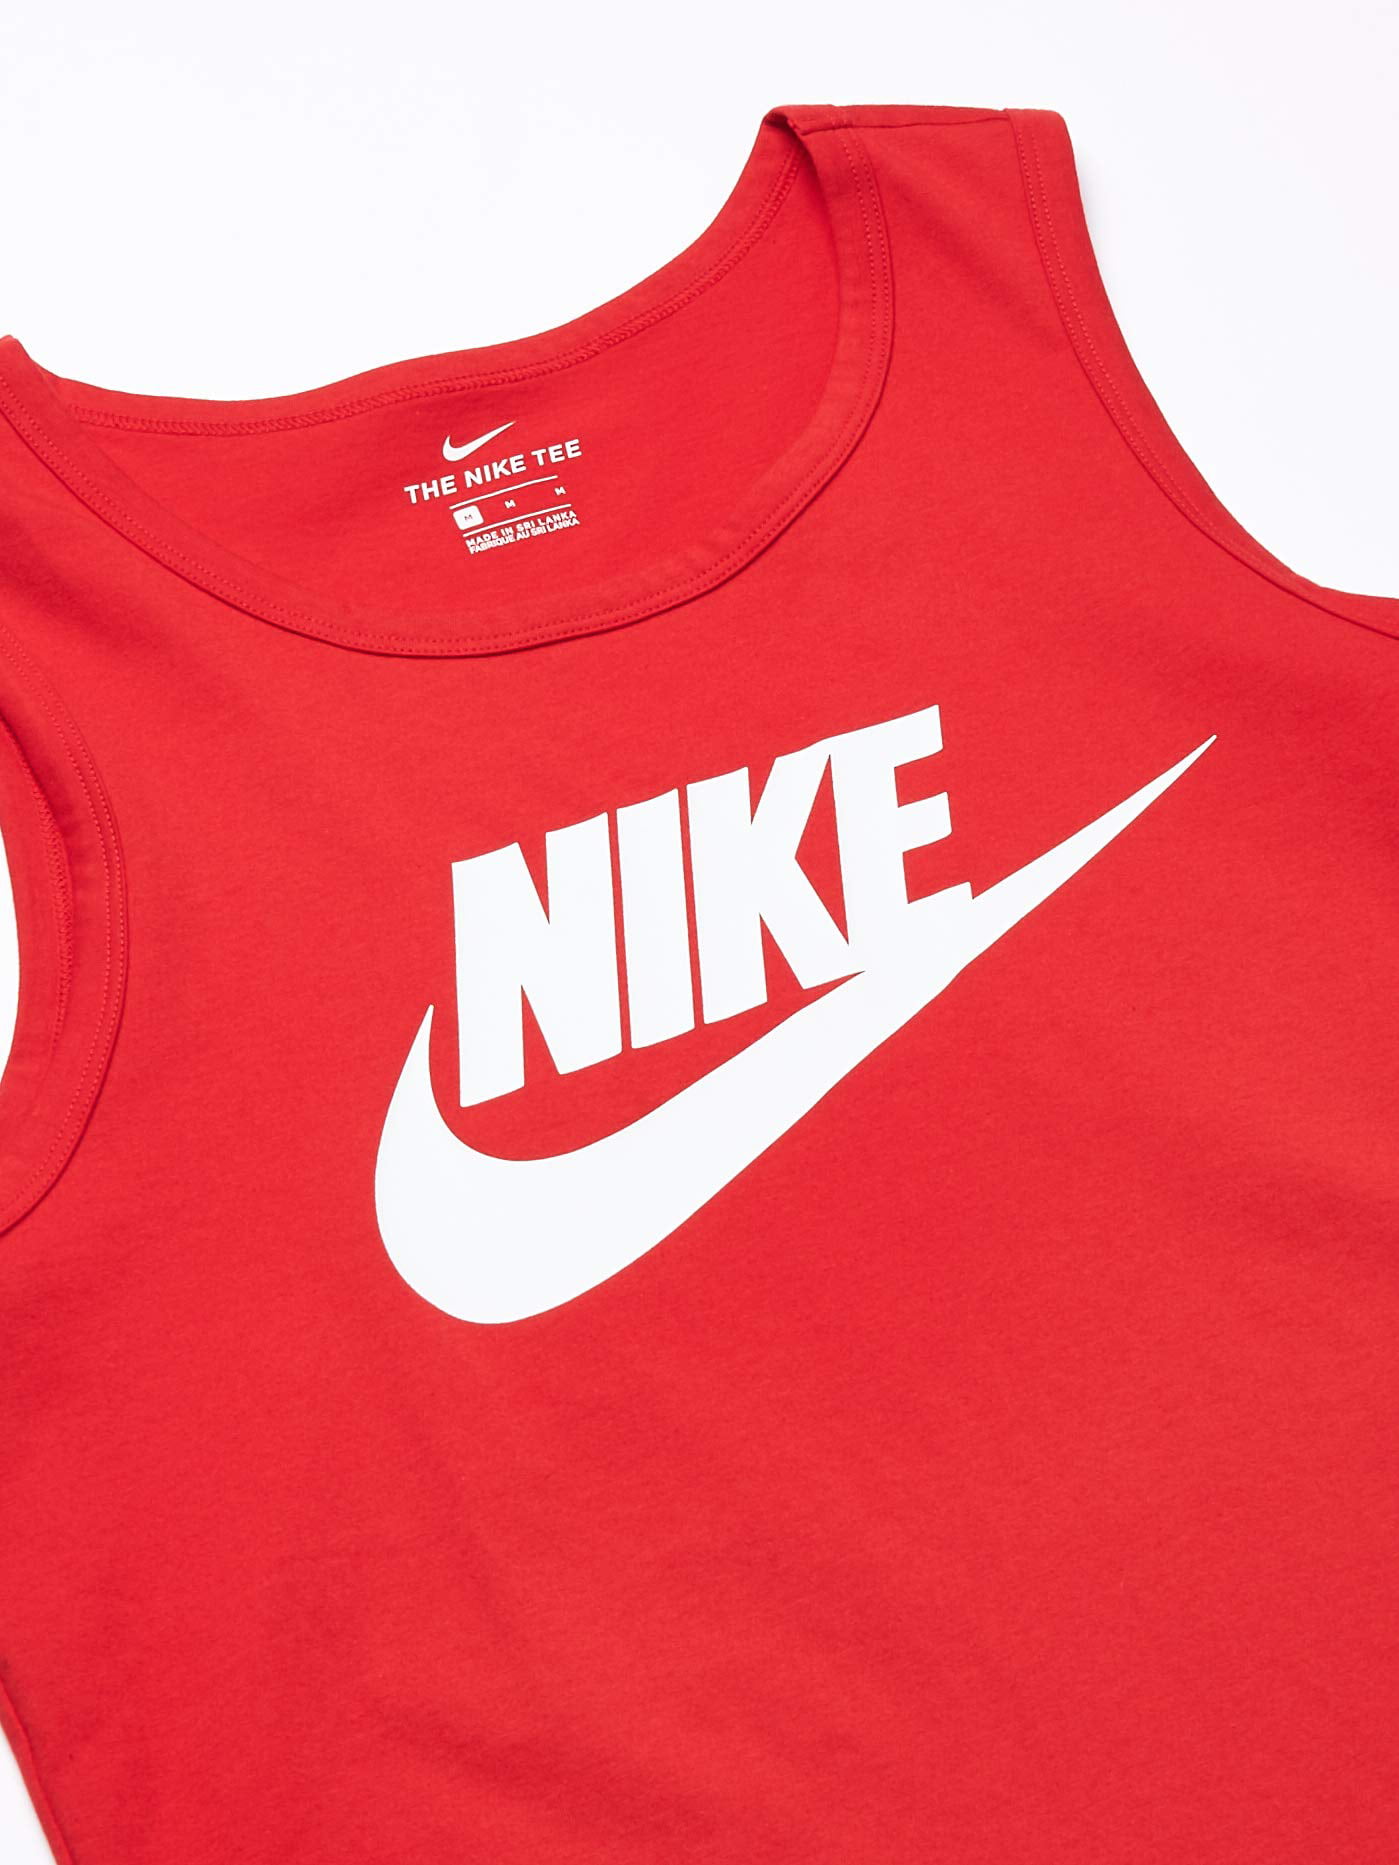 Nike Sportswear Sleevless Tank Top Shirt (Red/White, Walmart.com